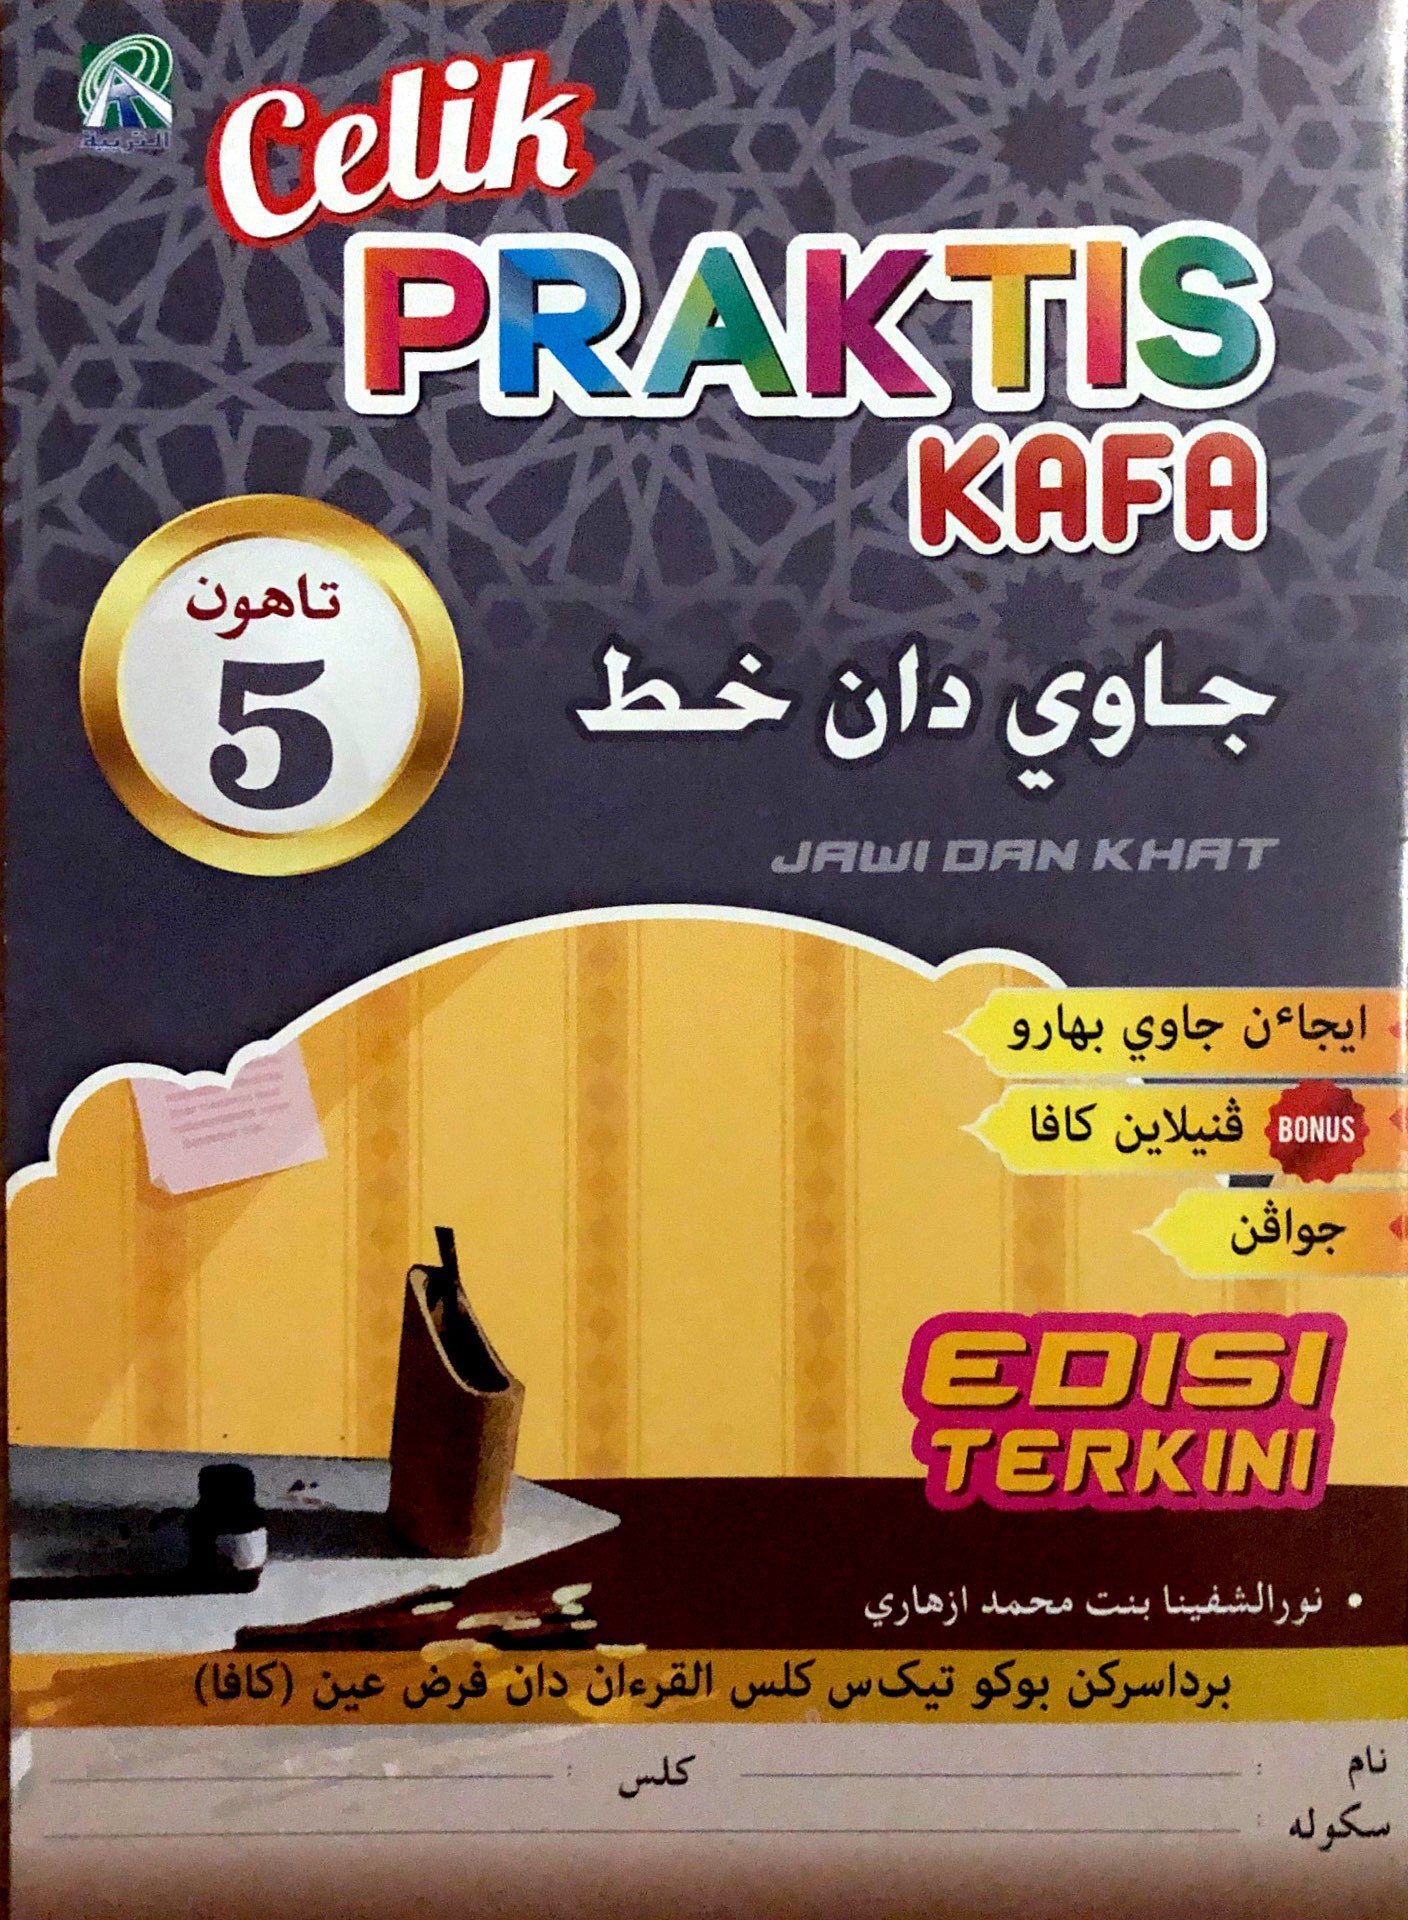 Celik Praktis Kafa Jawi Dan Khat Tahun 5 No 1 Online Bookstore Revision Book Supplier Malaysia